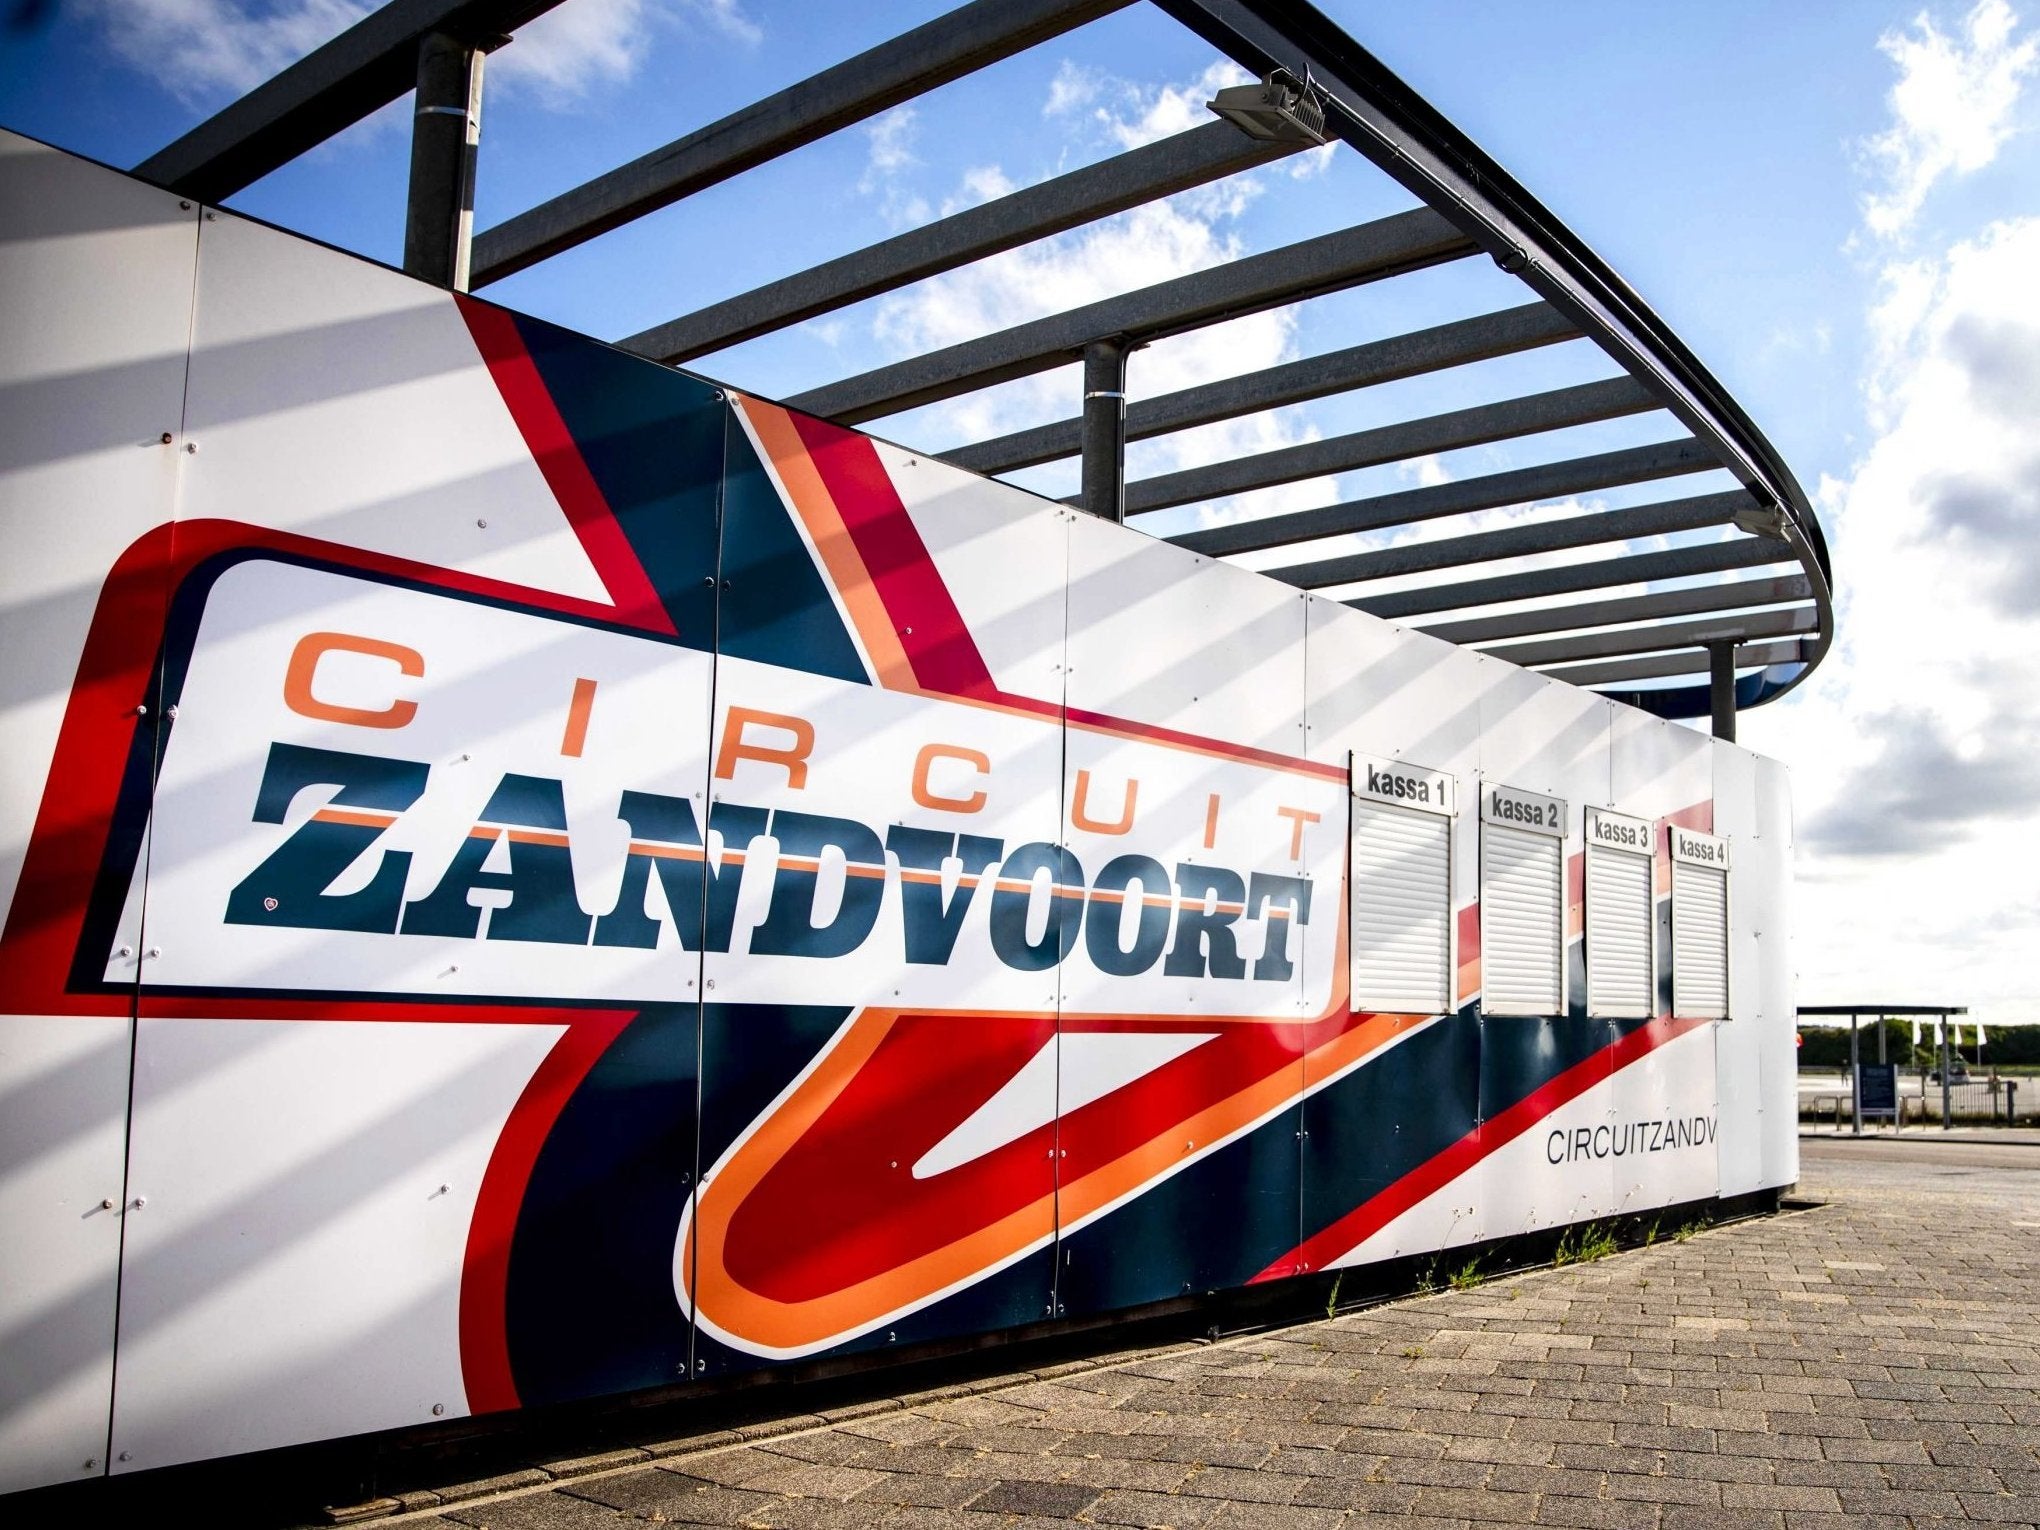 Zandvoort will host the Dutch Grand Prix in 2020